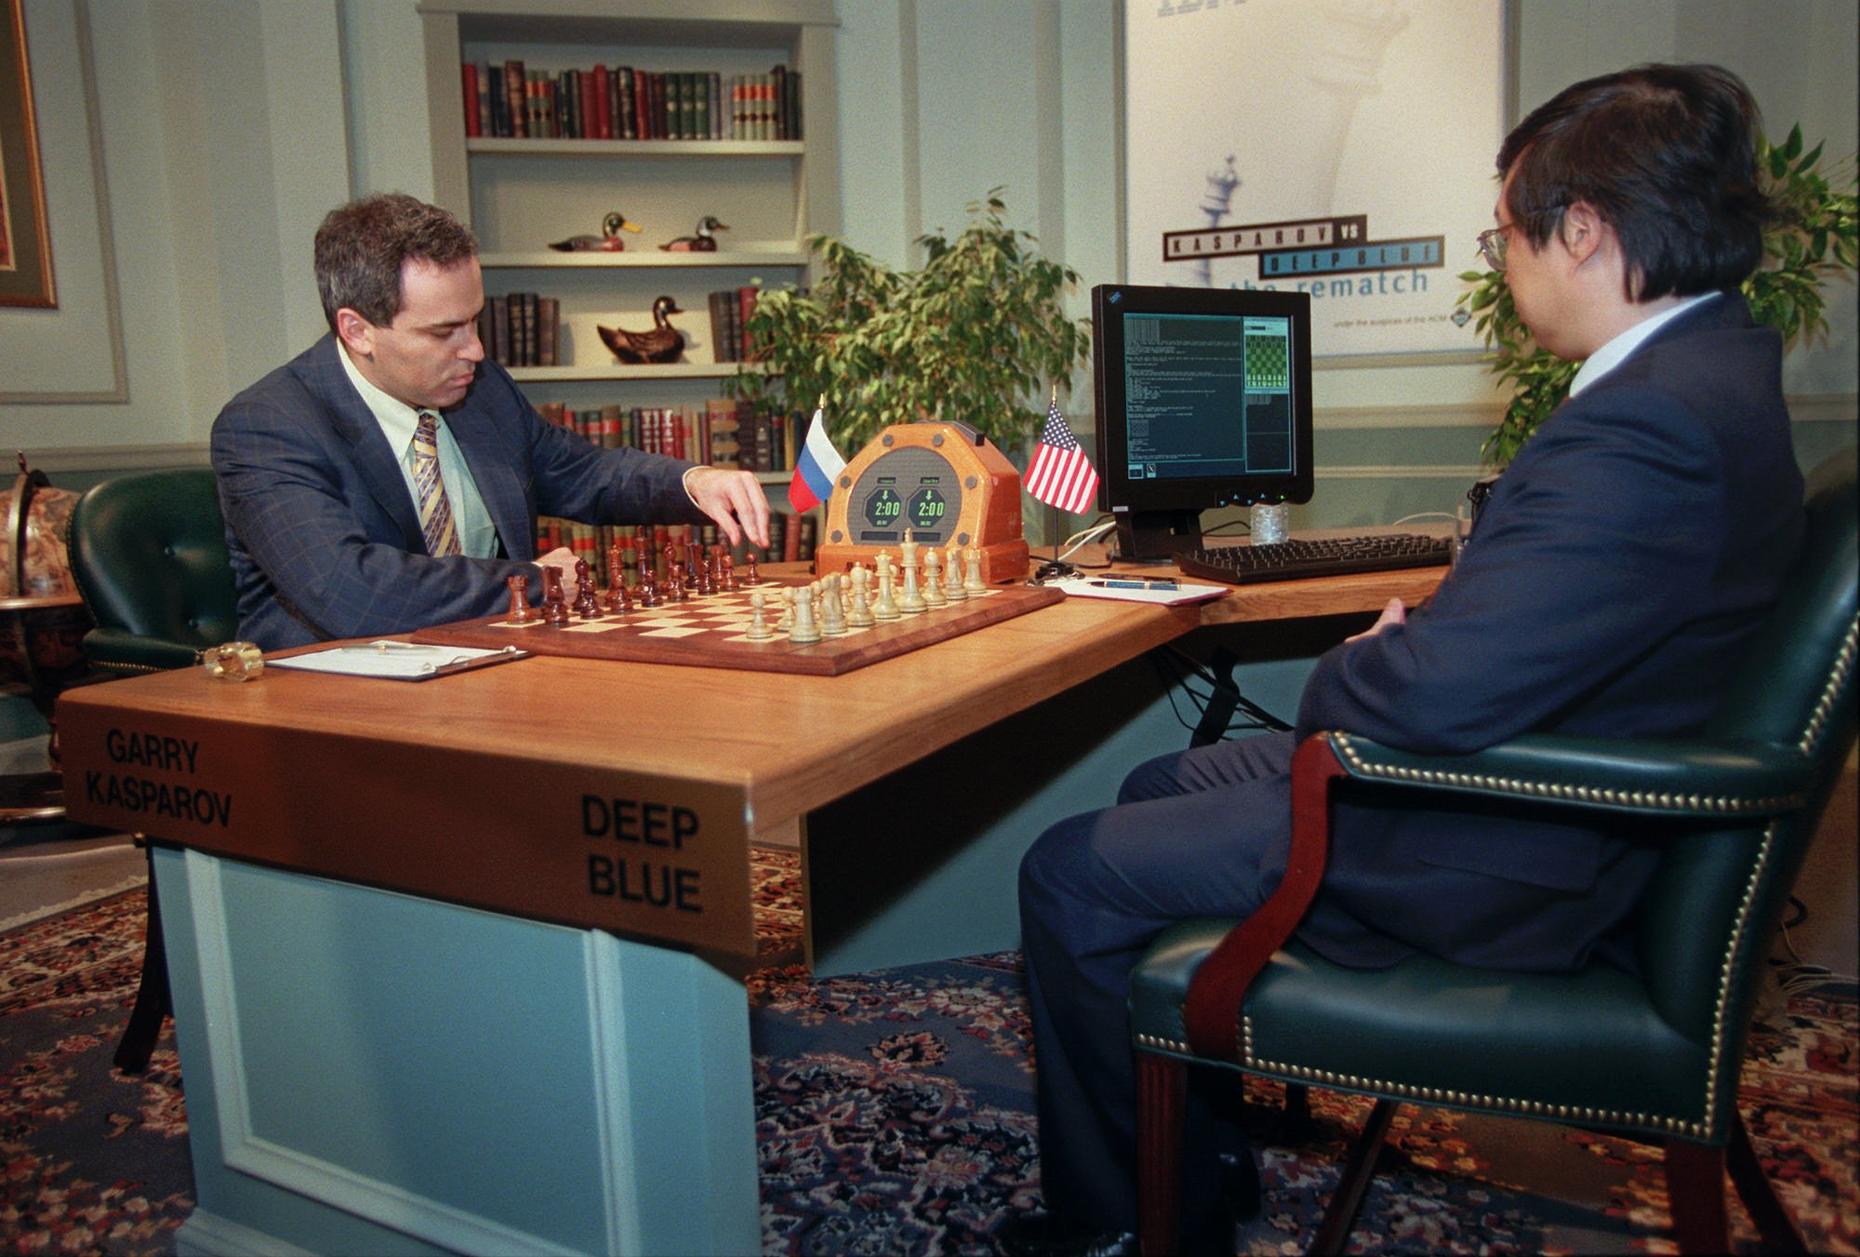 IBM's Deep Blue defeats world chess champion, Garry Kasparov 